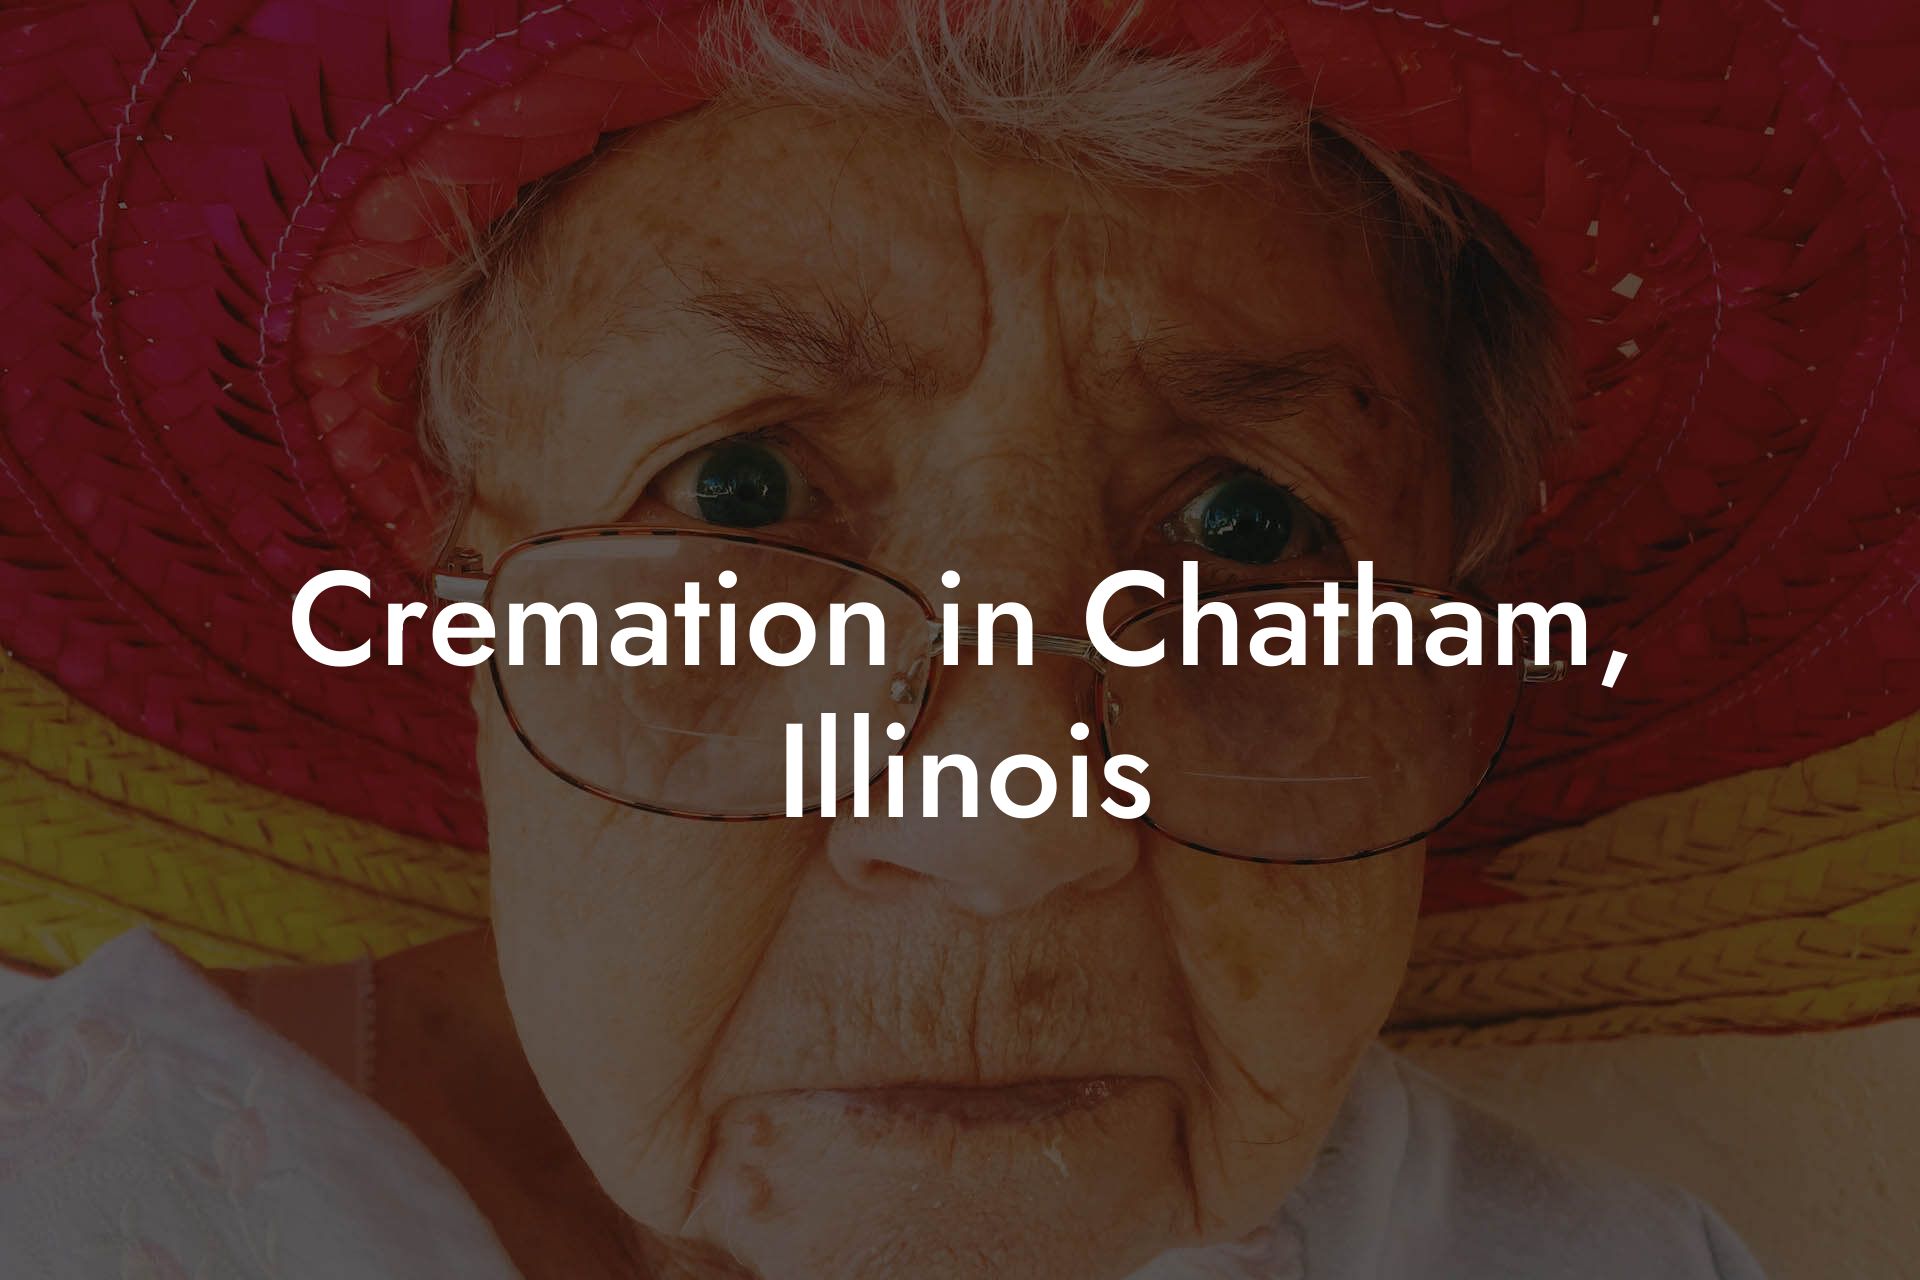 Cremation in Chatham, Illinois